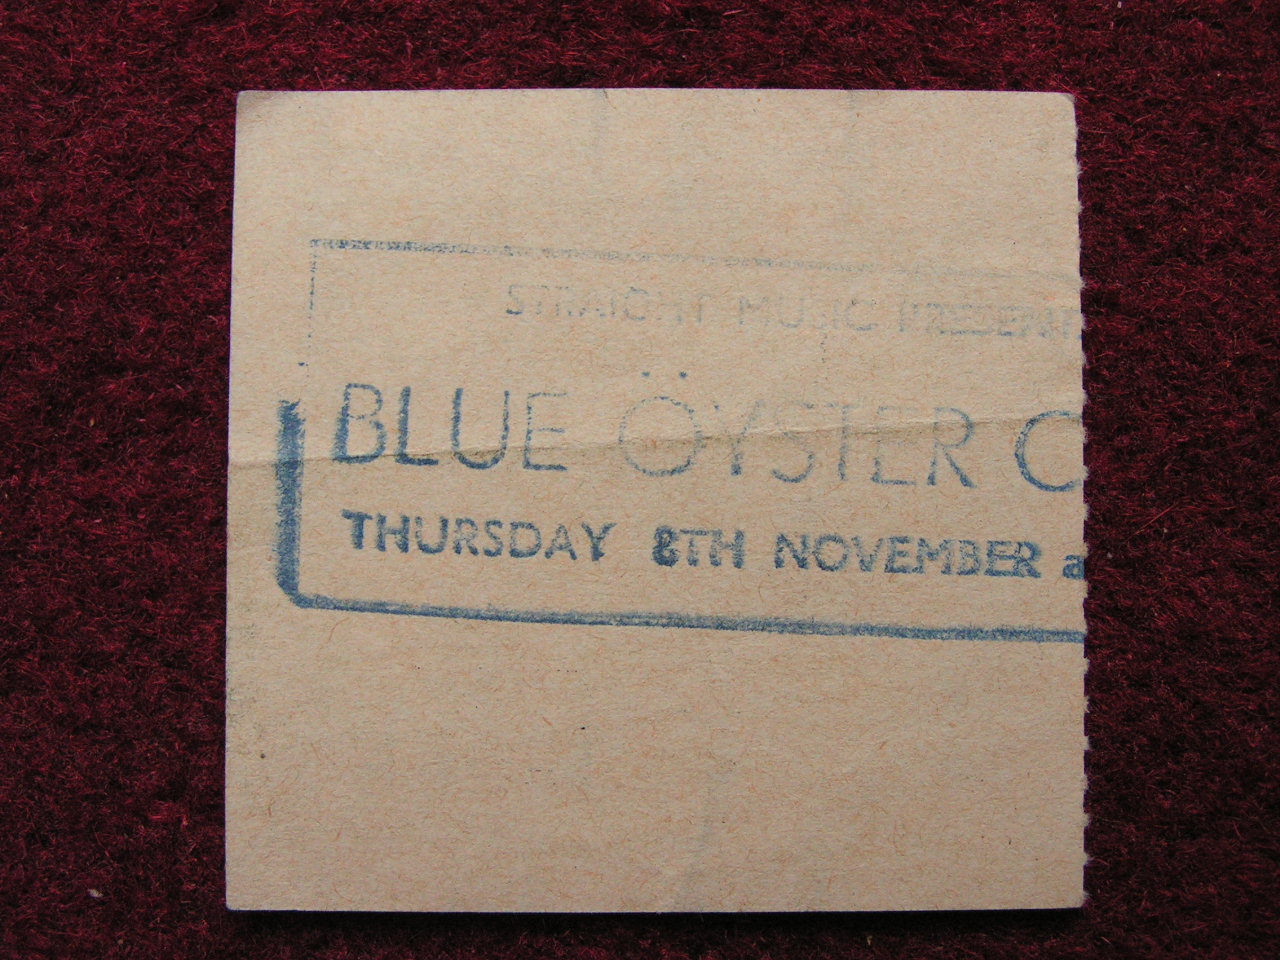 Ticket Stub - Blue Oyster Cult Hammersmith Odeon 8/11/79